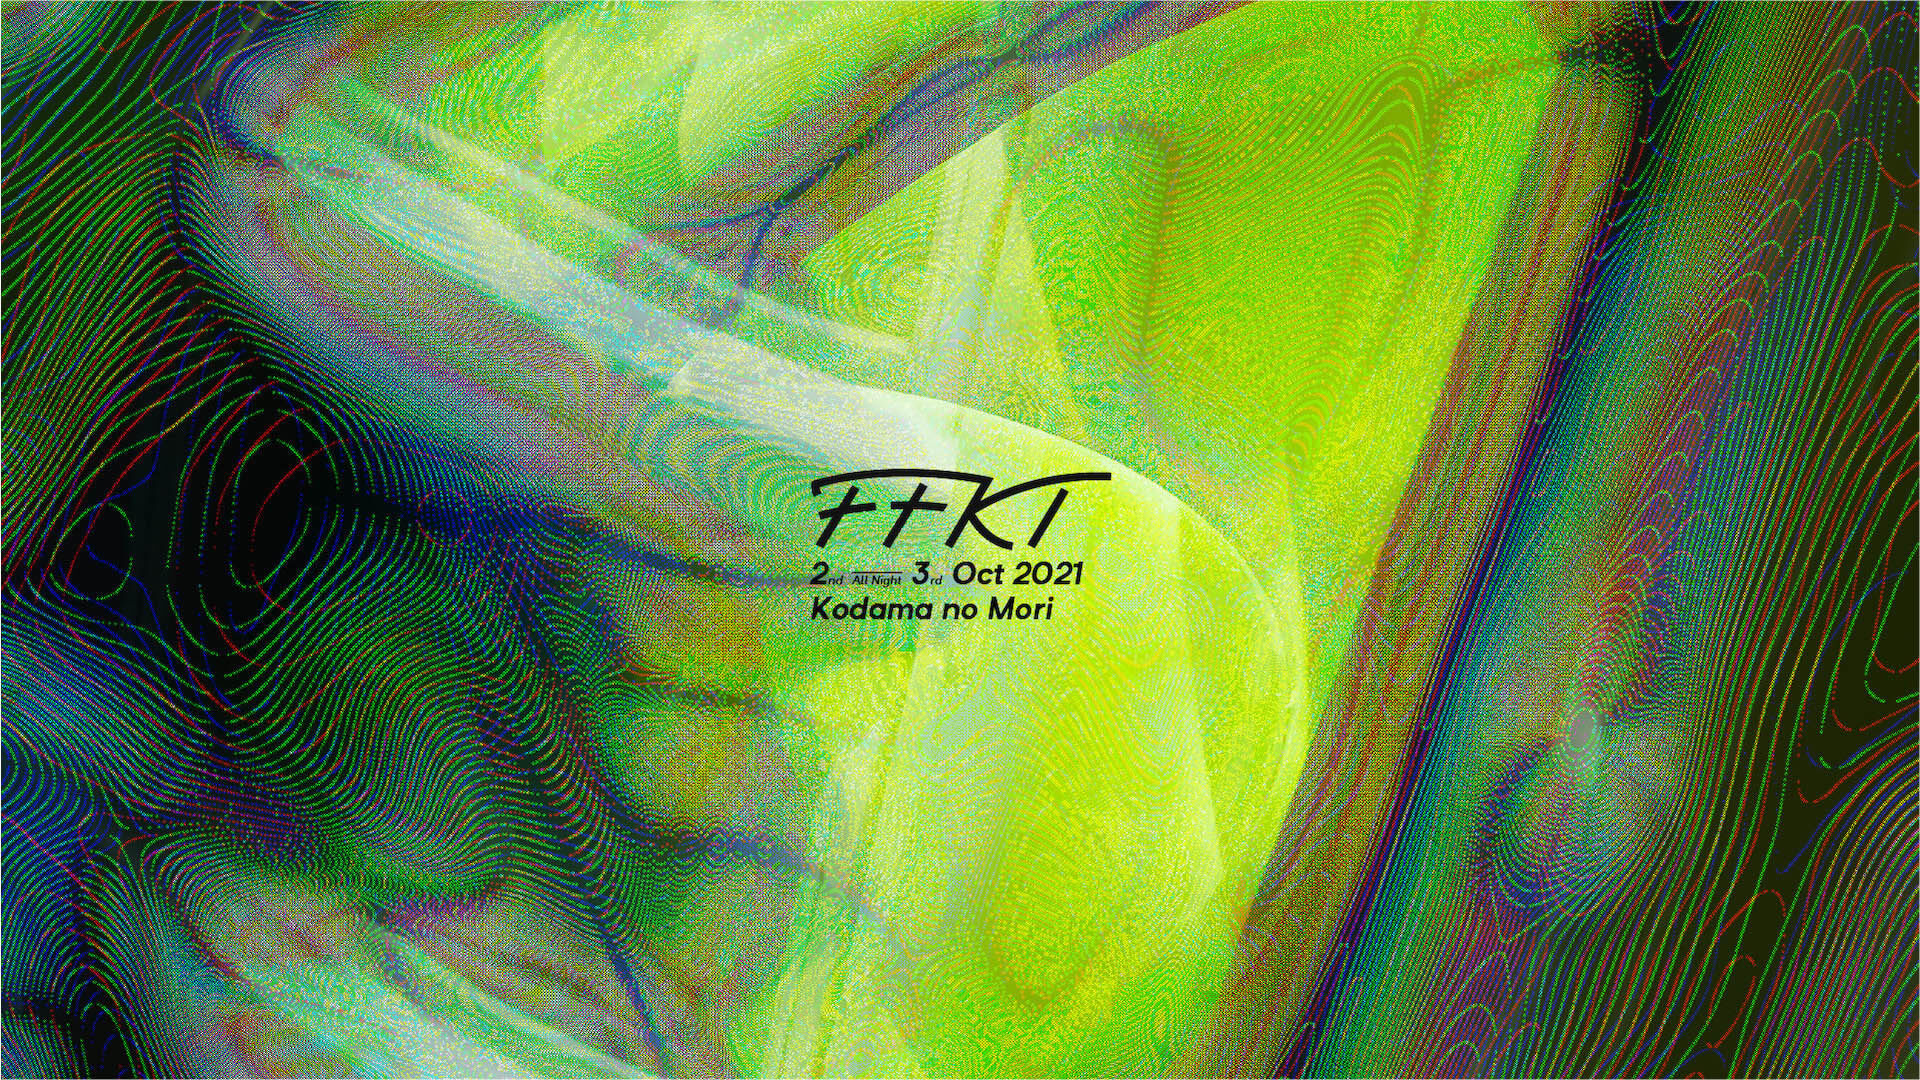 ＜FFKT2021＞が10月に延期開催決定！FFKTグッズも公式サイトで販売開始 music210602_ffkt_1